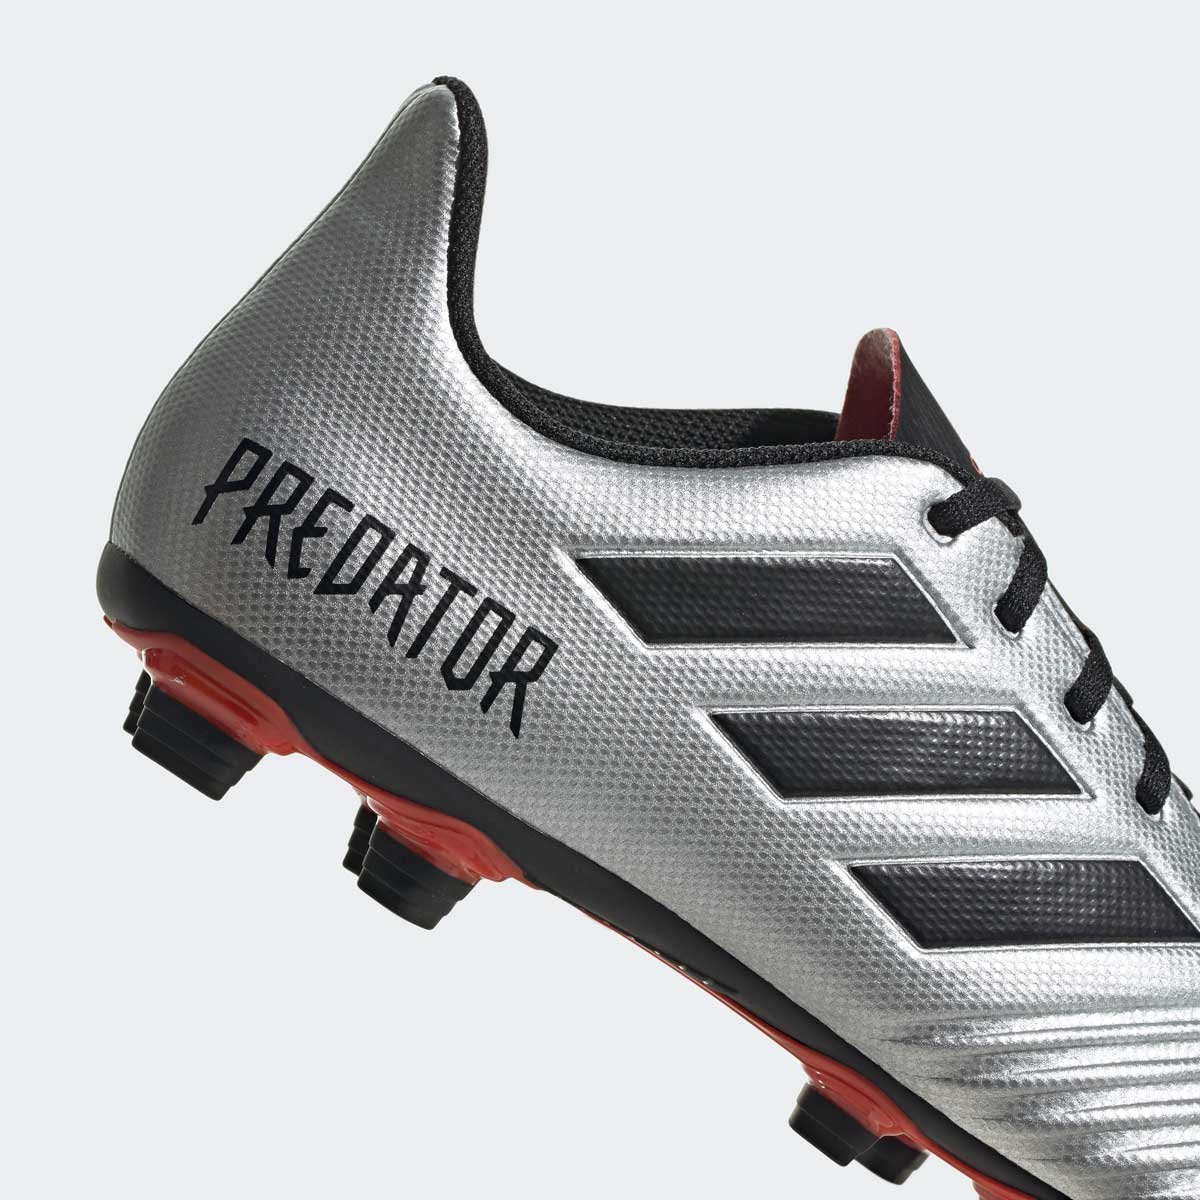 Calzado Soccer Predator 19.4 Fxg Gris Adidas - Caballero